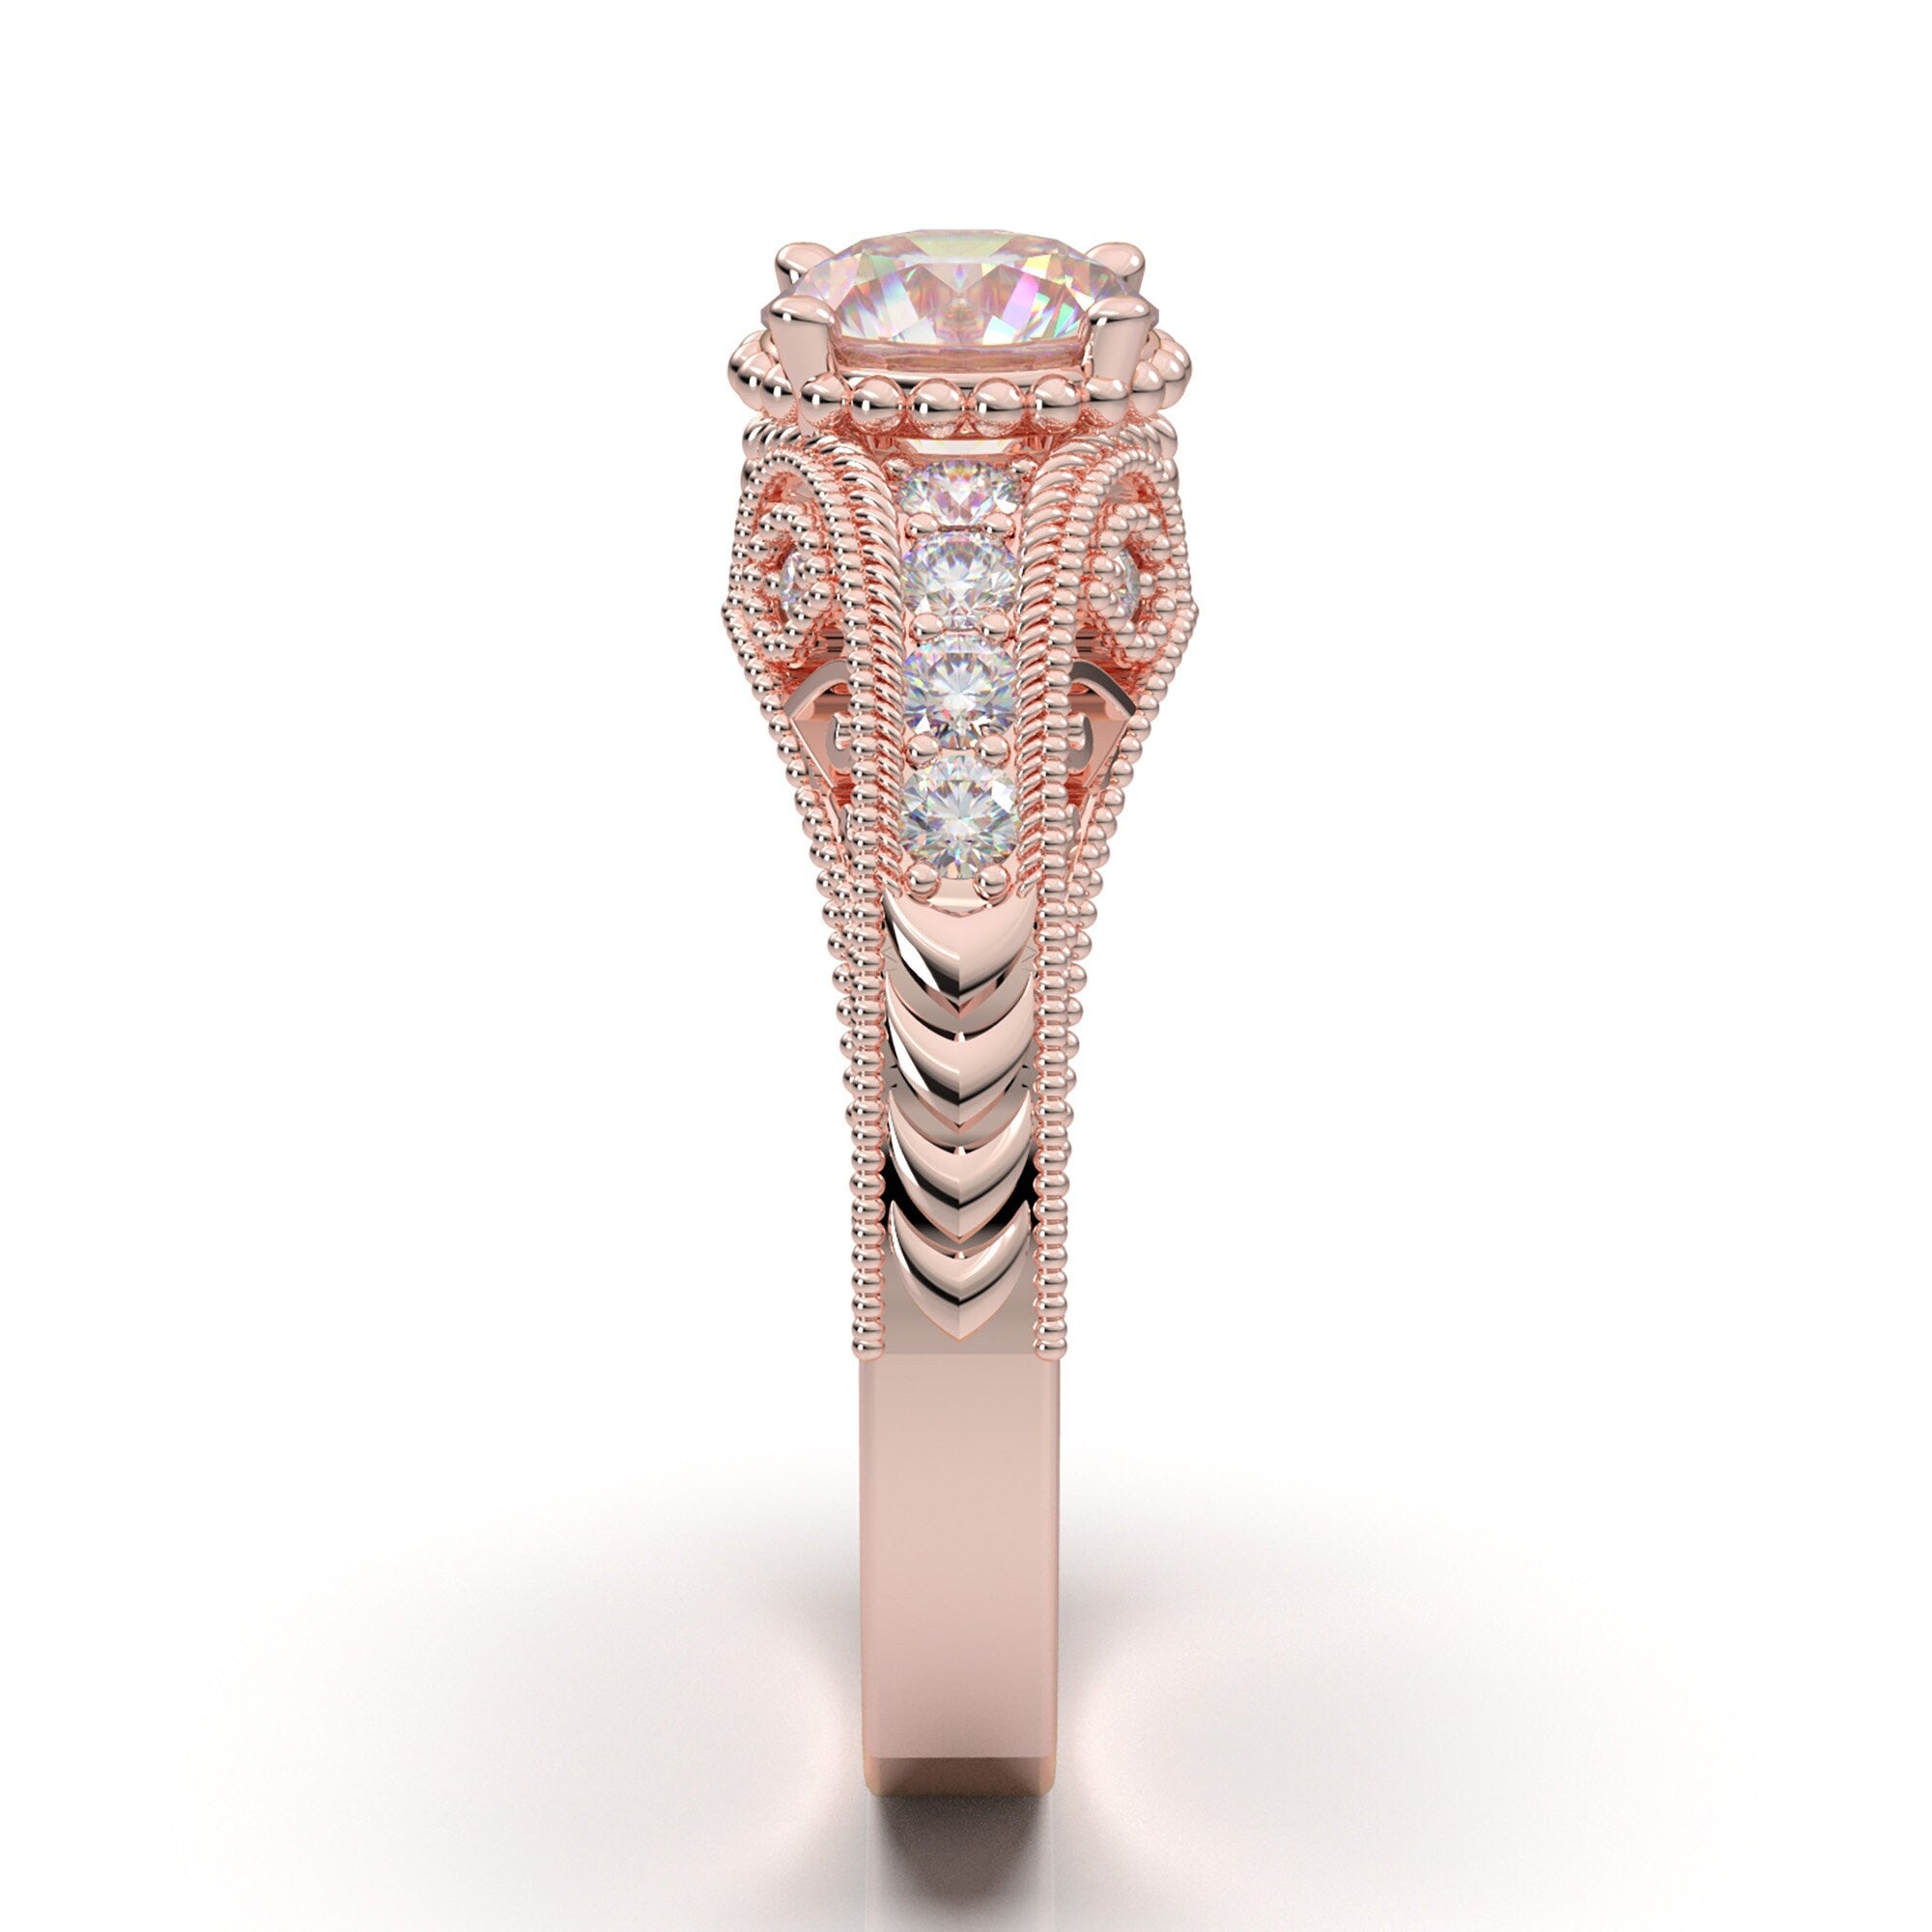 Late Art Deco Engagement Ring Transitional Cut Diamond 1.06ct H/VVS2 GIA